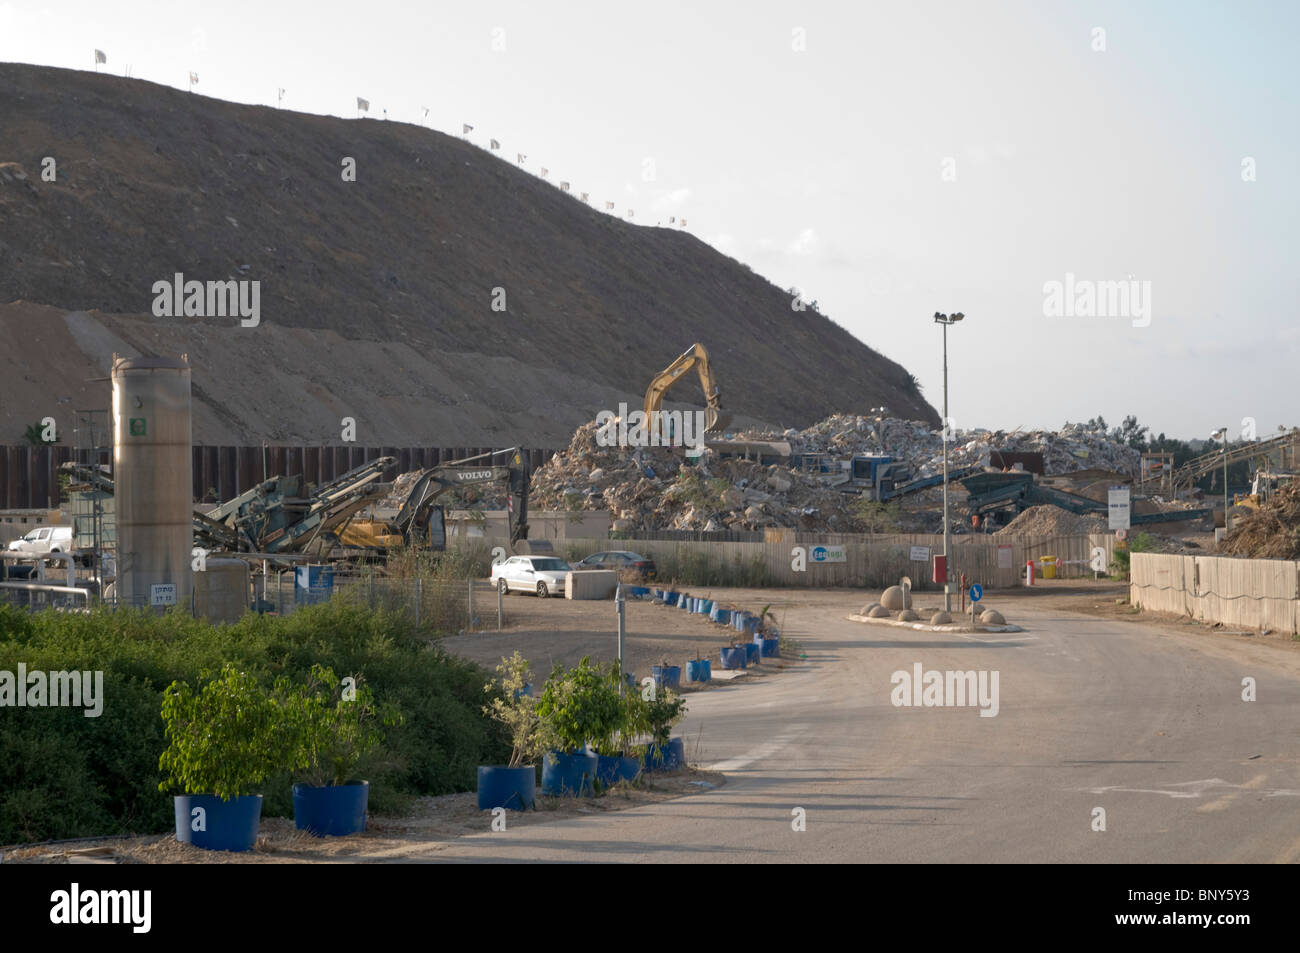 Bauzentrum Abfallbehandlung. Stockfoto